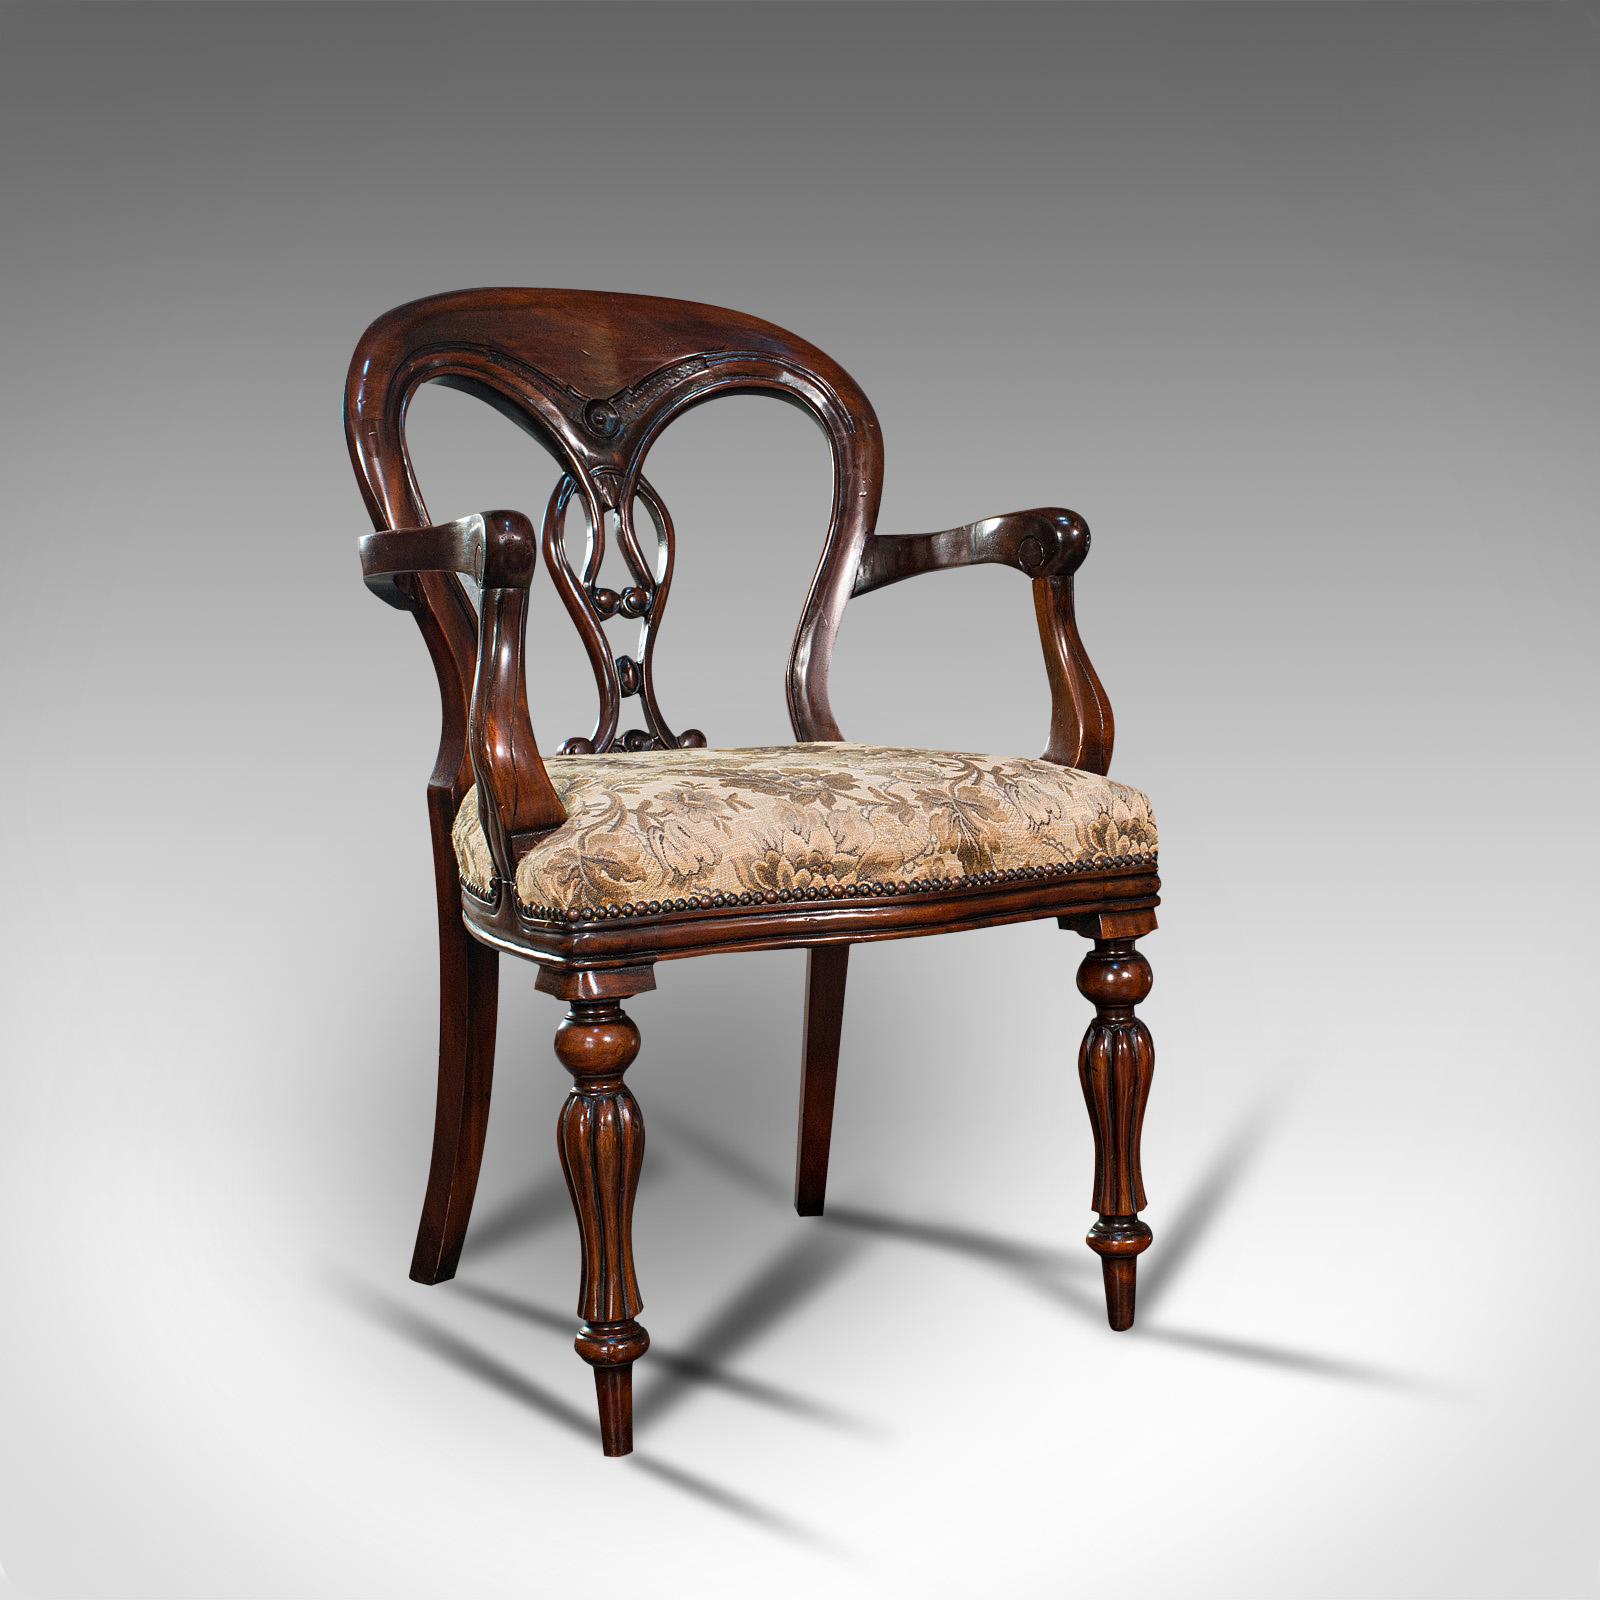 British Vintage Dining Chair Set, English, Mahogany, Carver, 6, Regency Revival